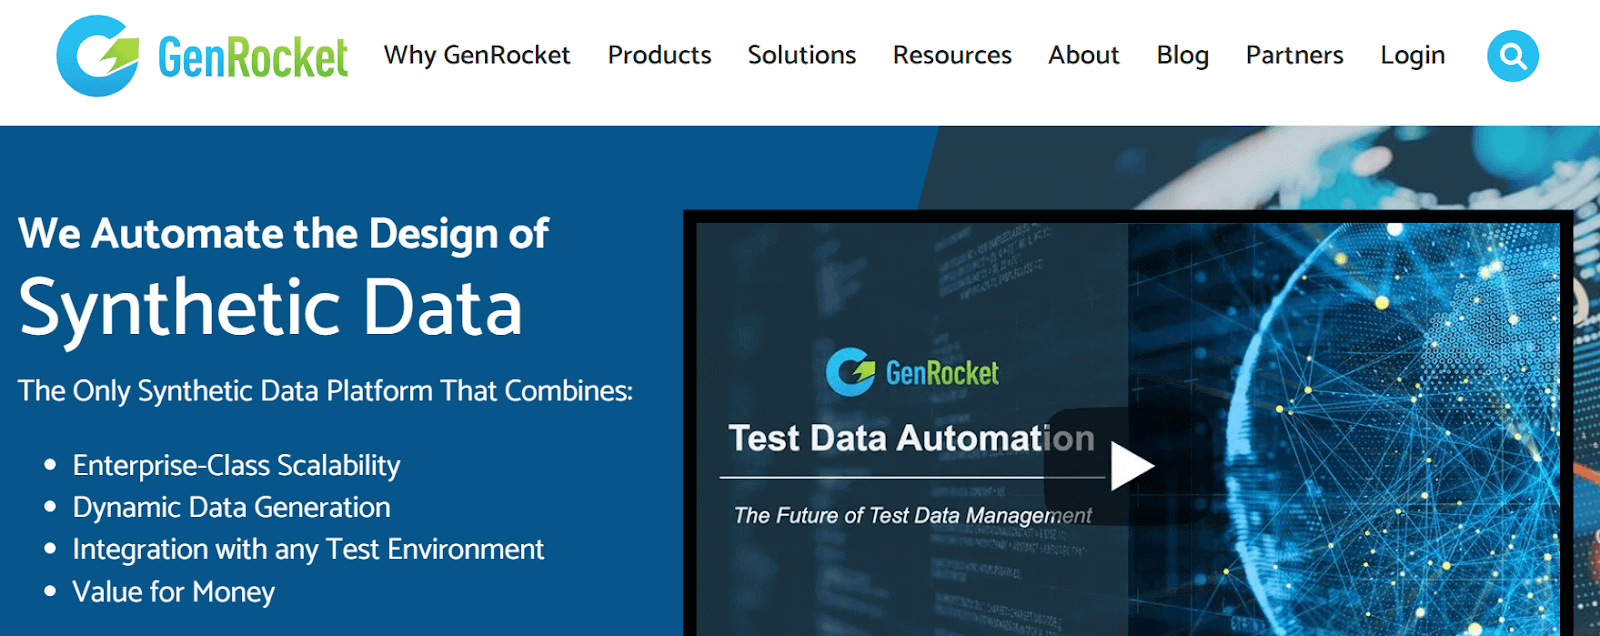  test data automation